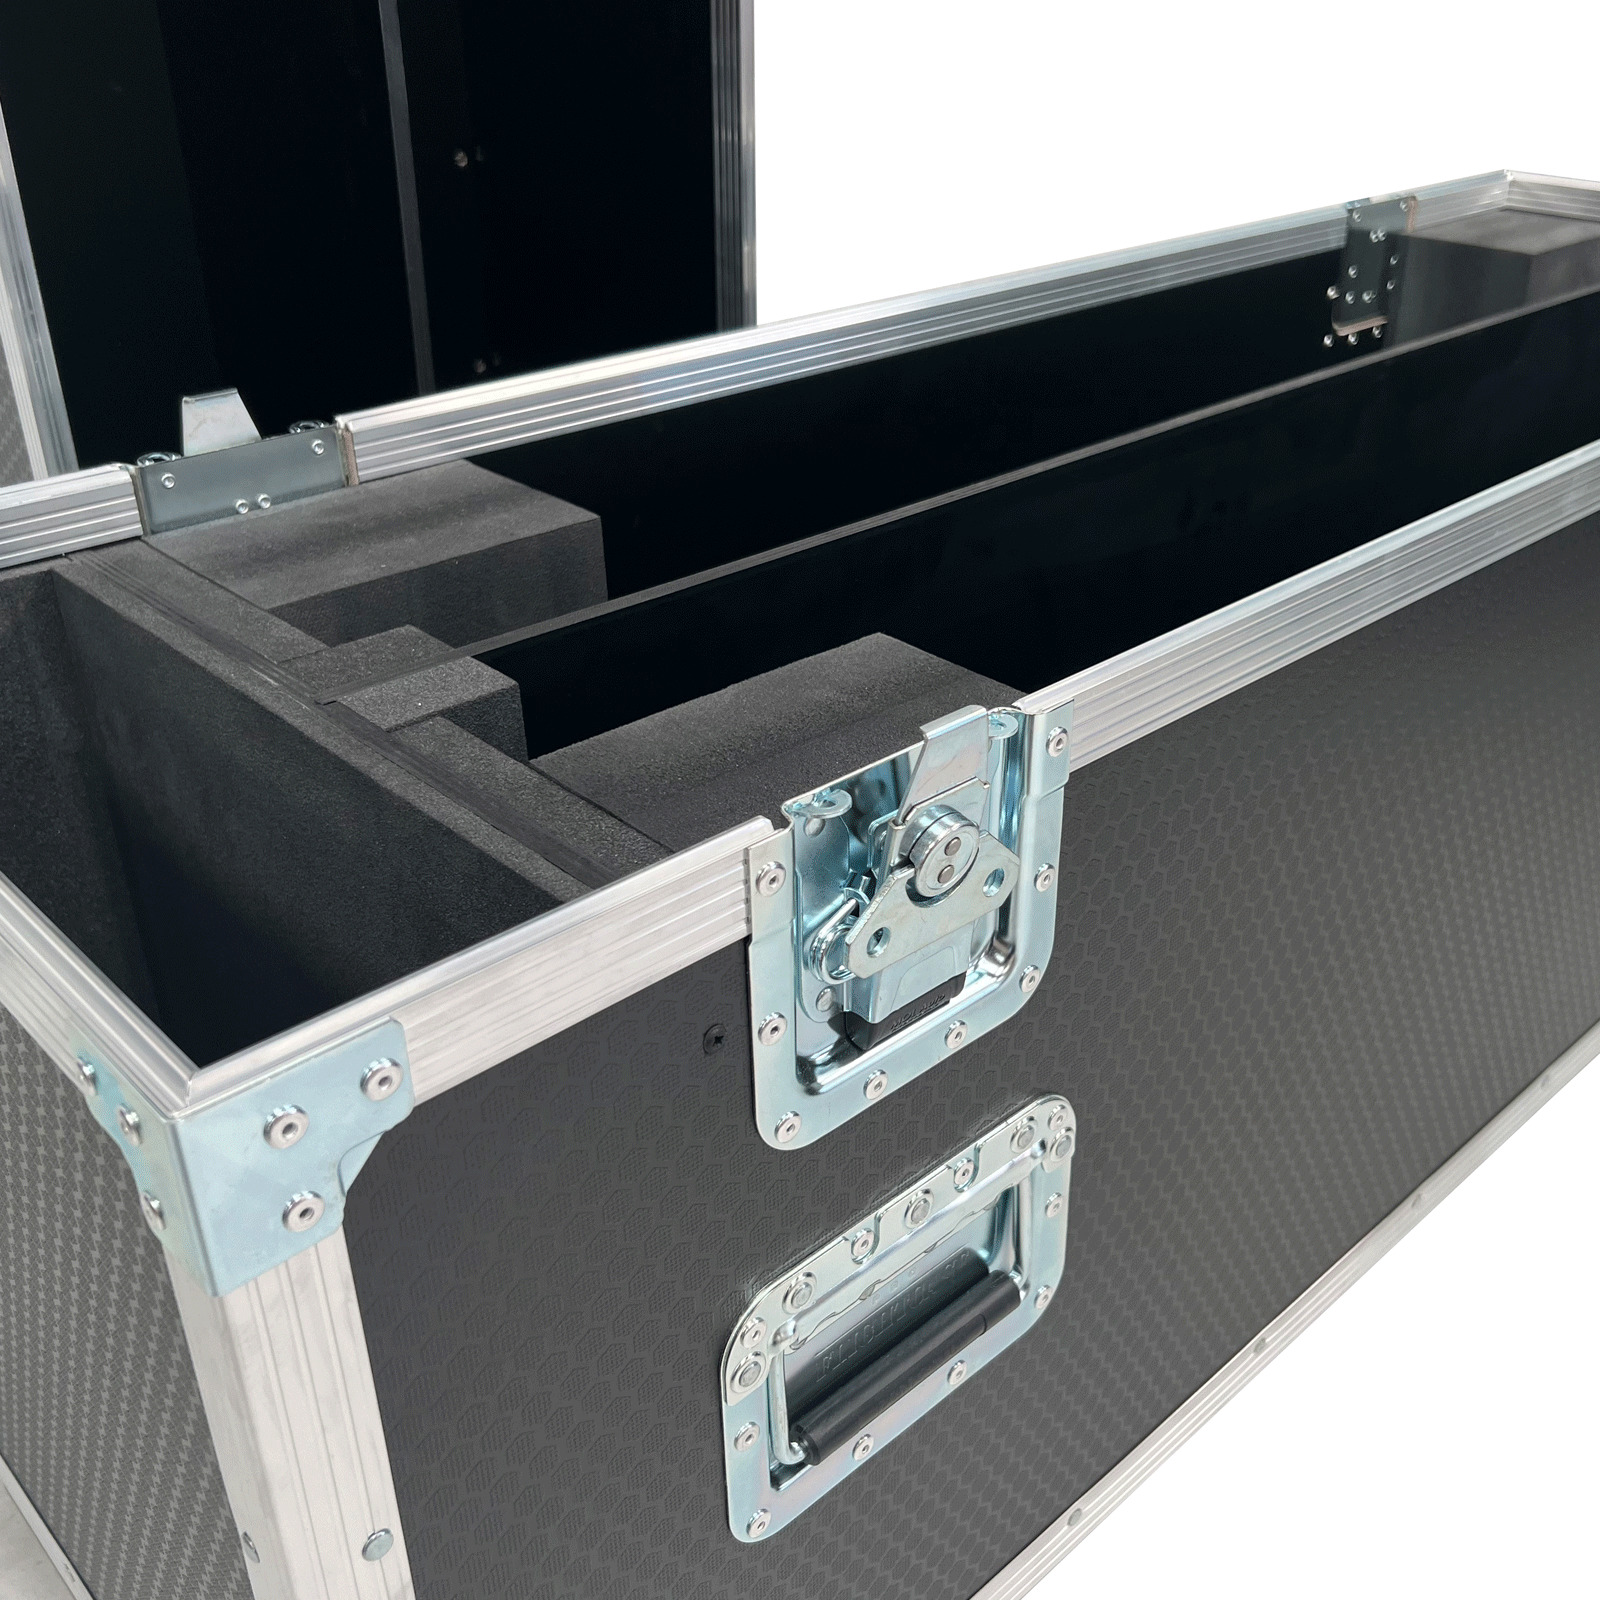 50 Plasma LCD TV Twin Flight Case for LG 50PK350 50